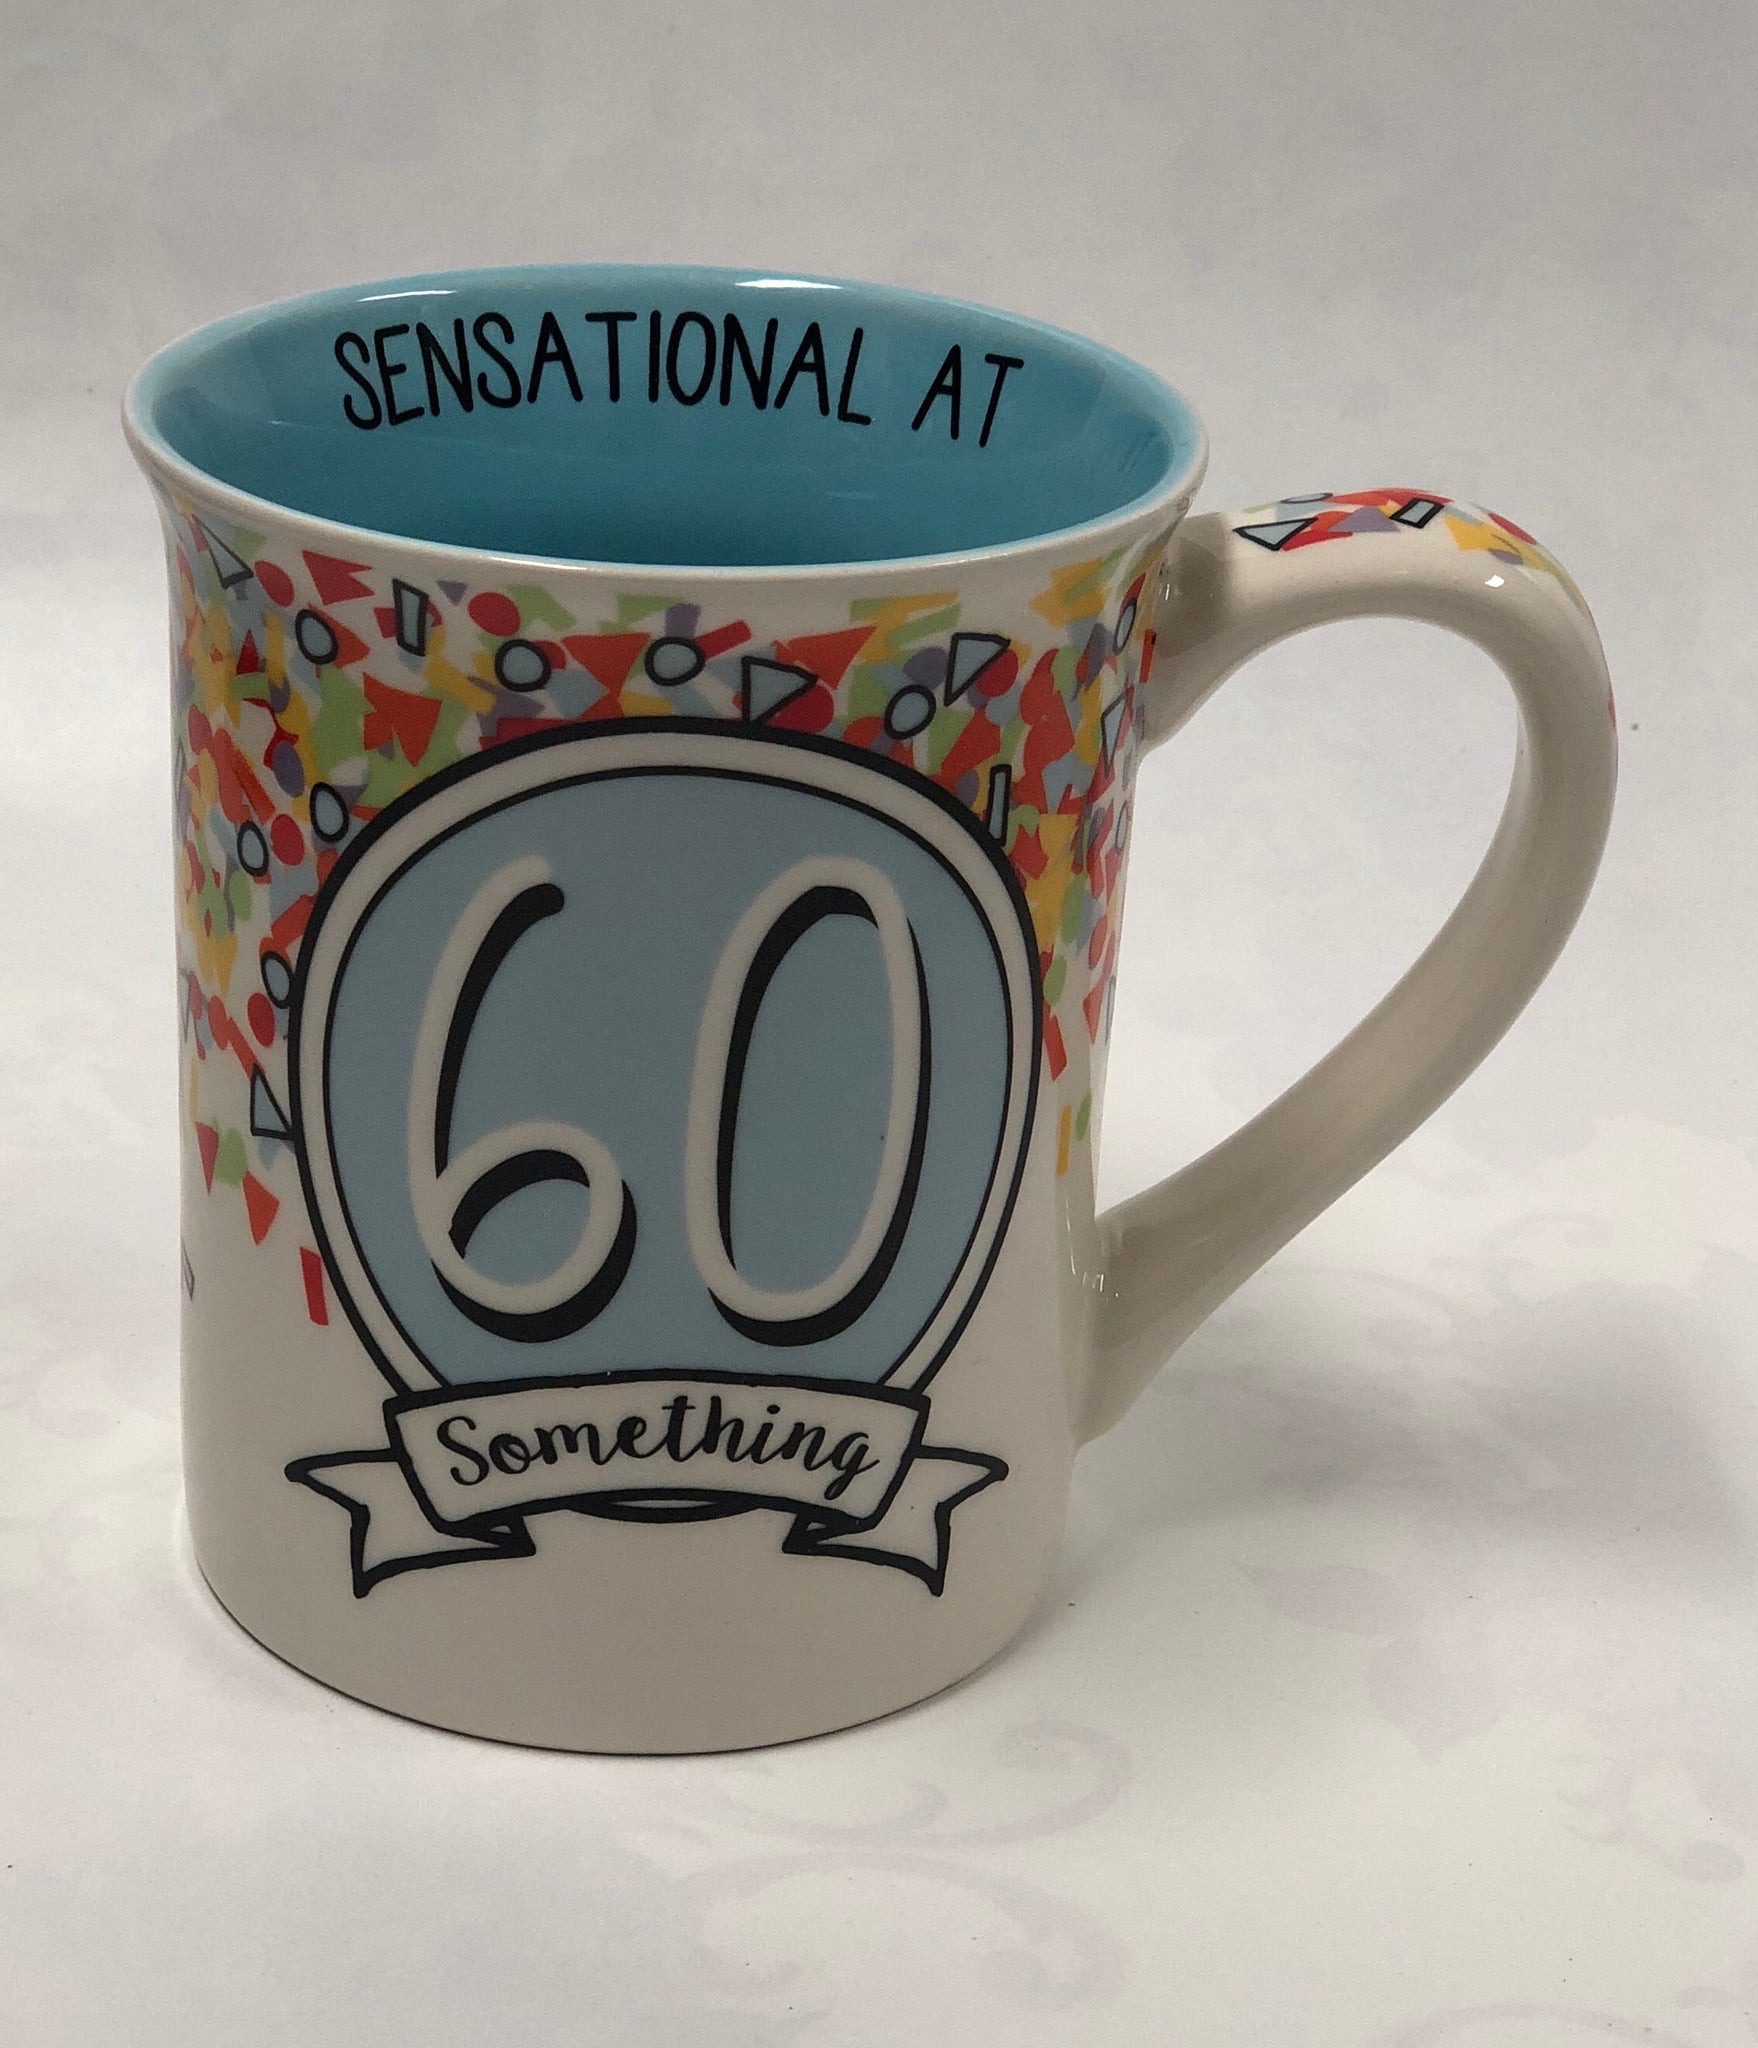 60 Something Mug